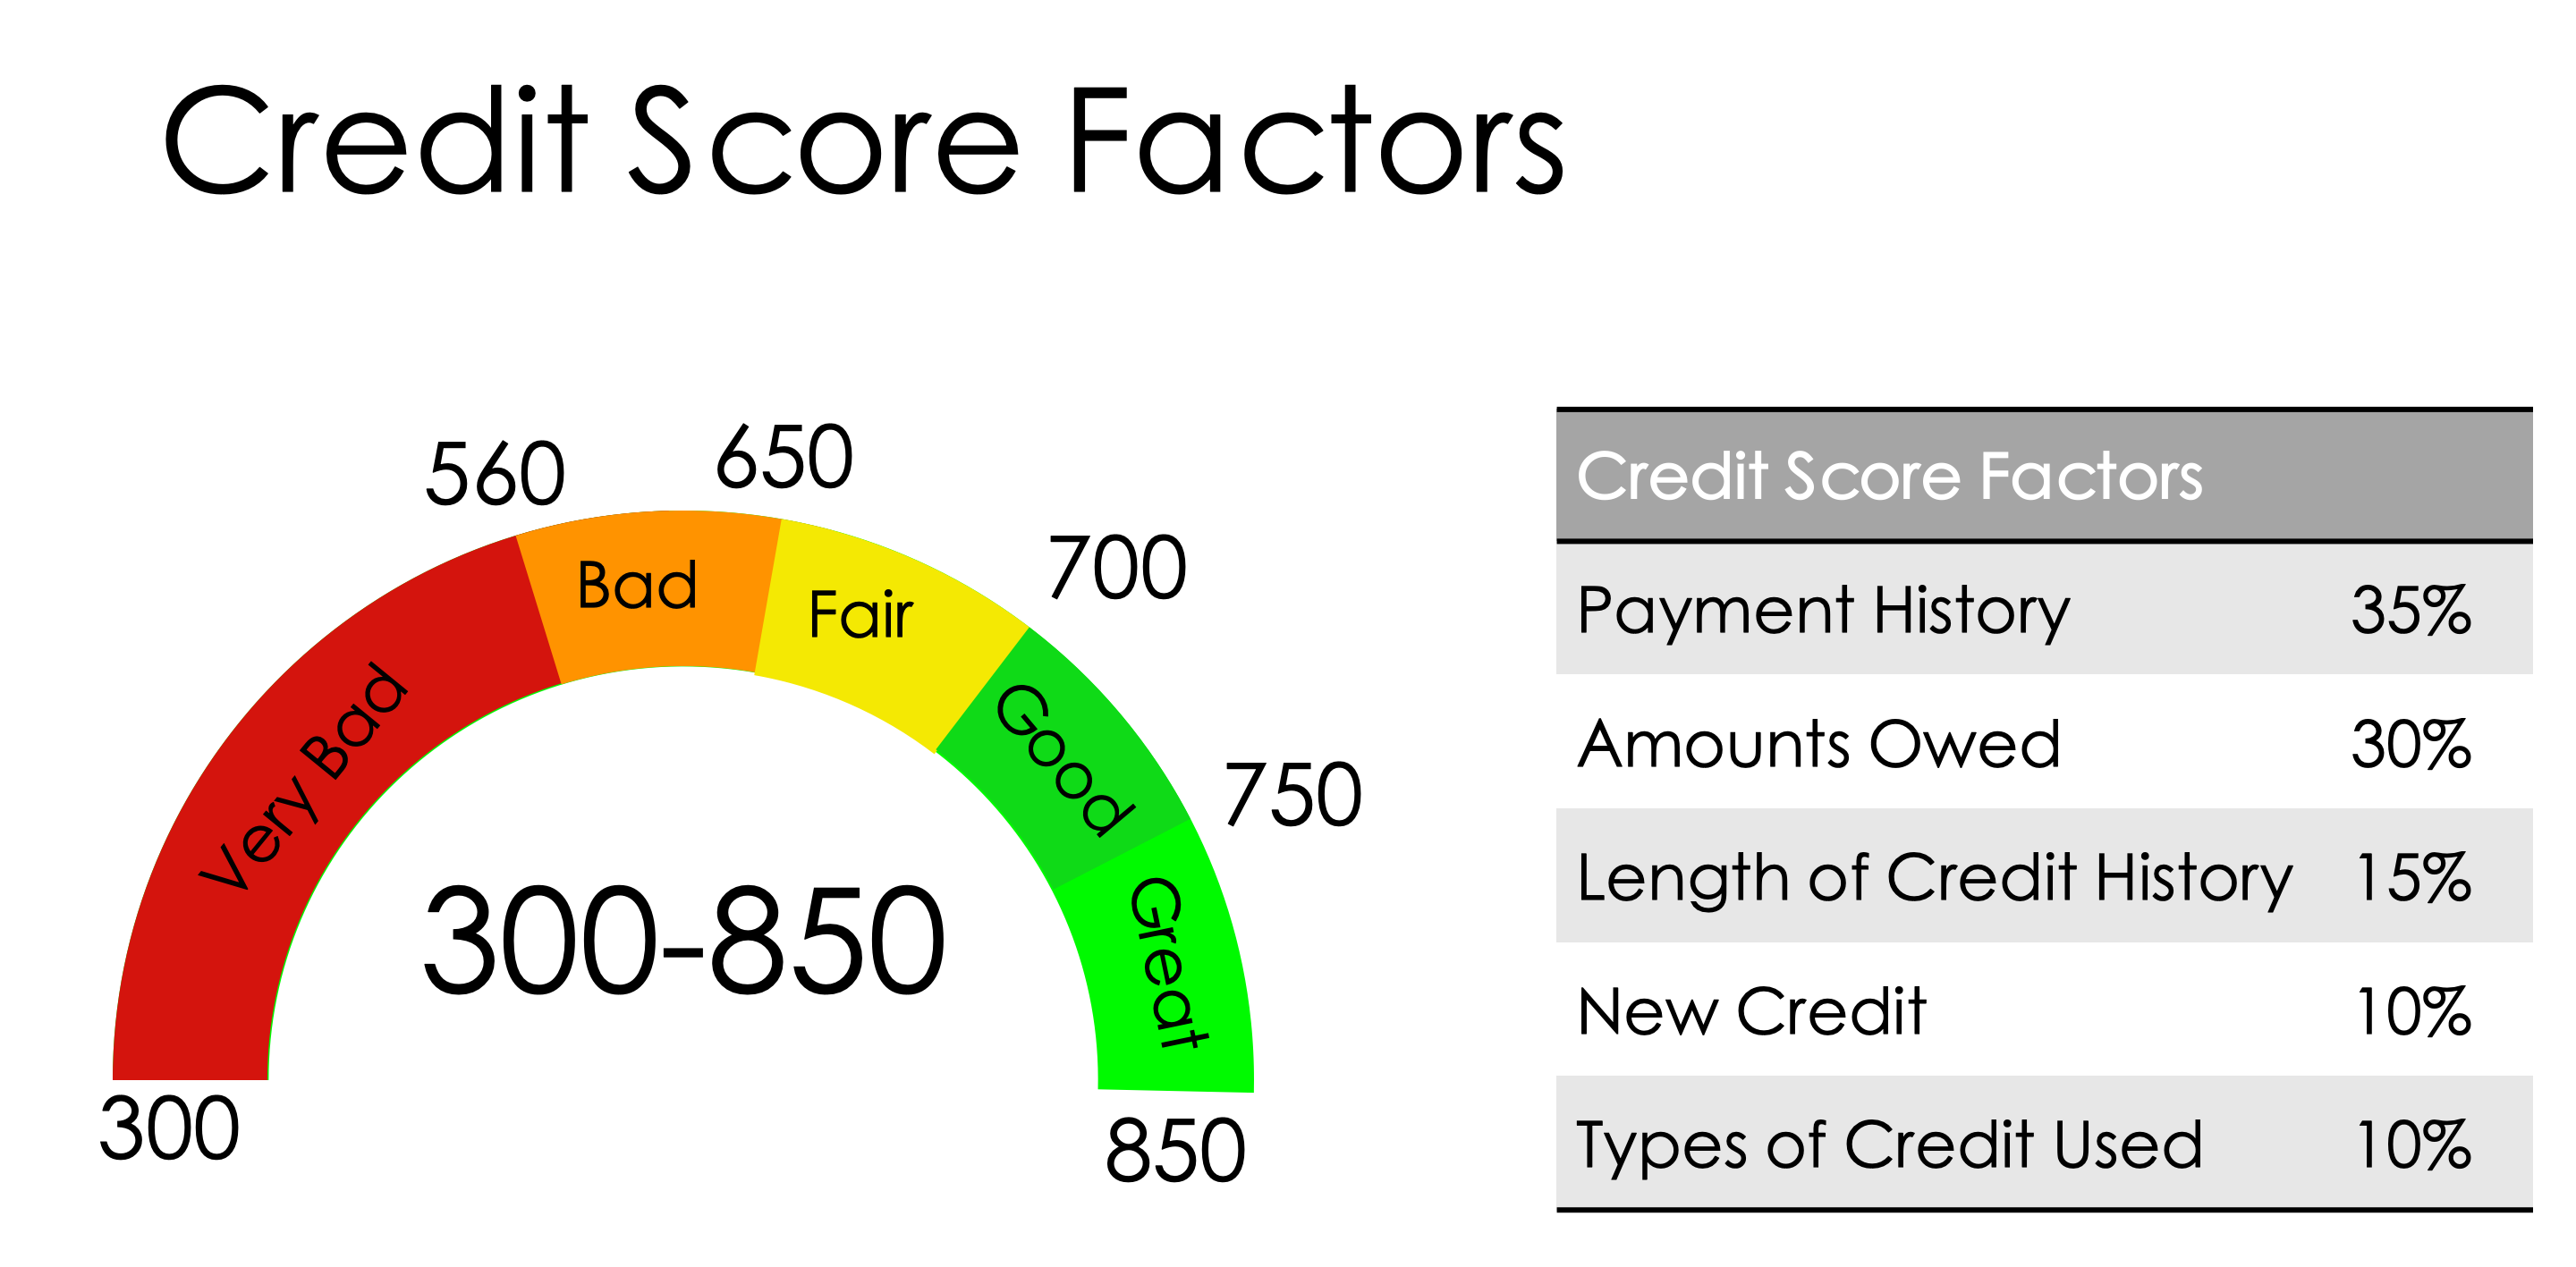 How Do I Get An 850 Credit Score